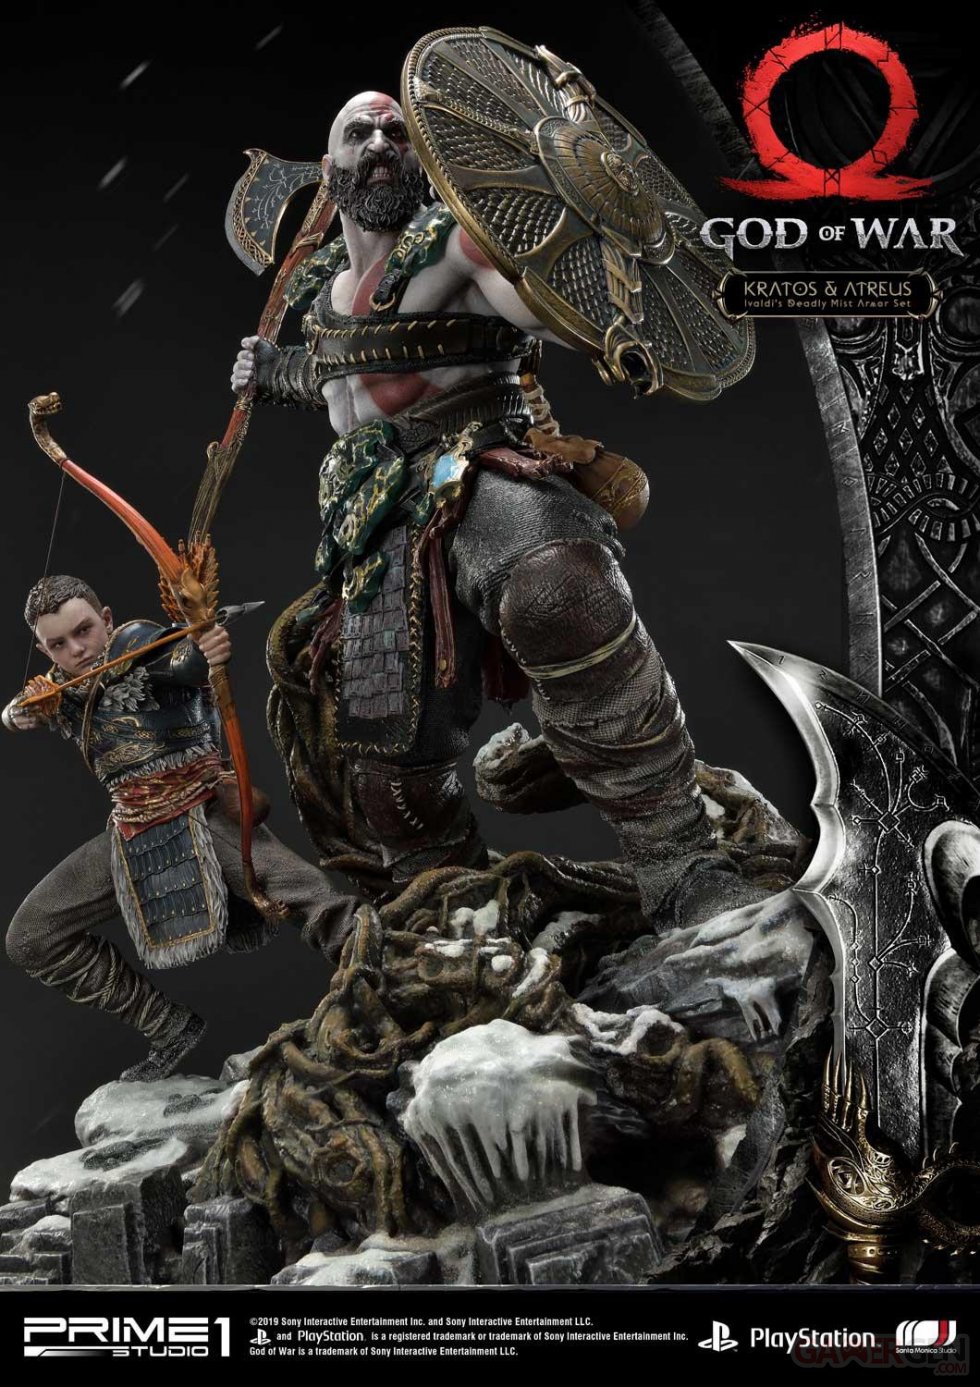 God-of-War-figurine-statuette-Prime-1-Studio-Kratos-Atreus-15-17-11-2019